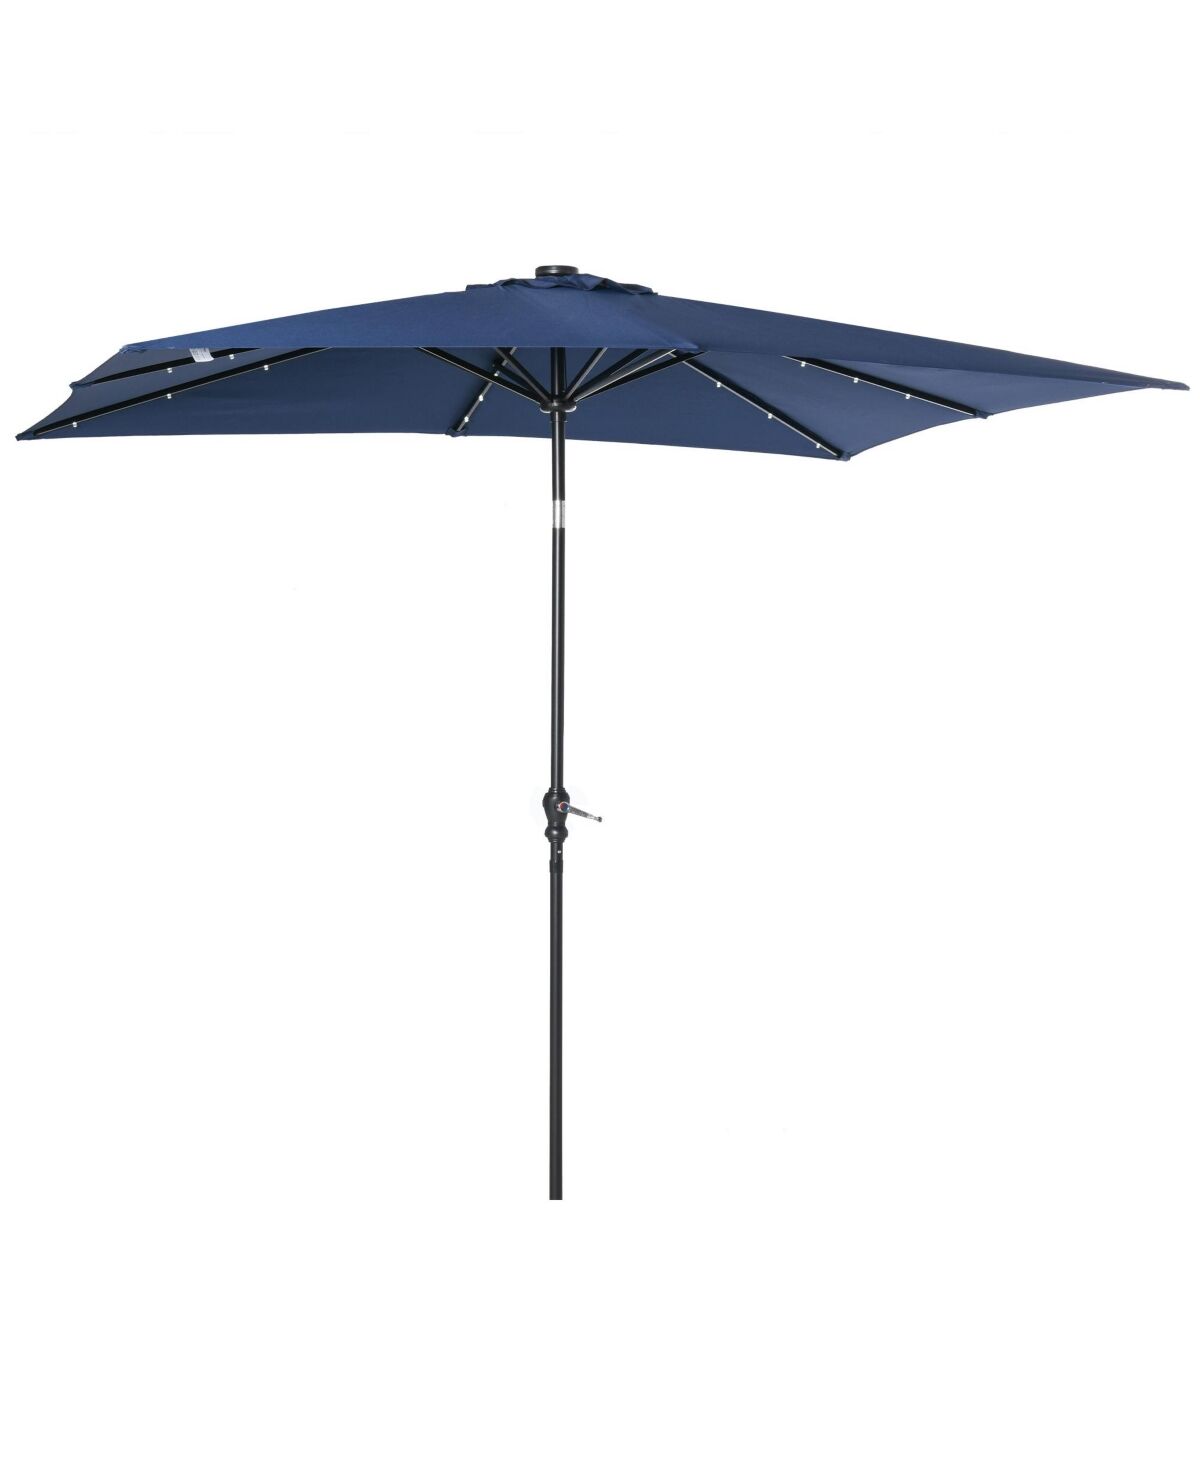 Outsunny 9' x 7' Patio Umbrella Outdoor Table Market Umbrella with Crank, Solar Led Lights, 45° Tilt, Push-Button Operation, for Deck, Backyard, Pool